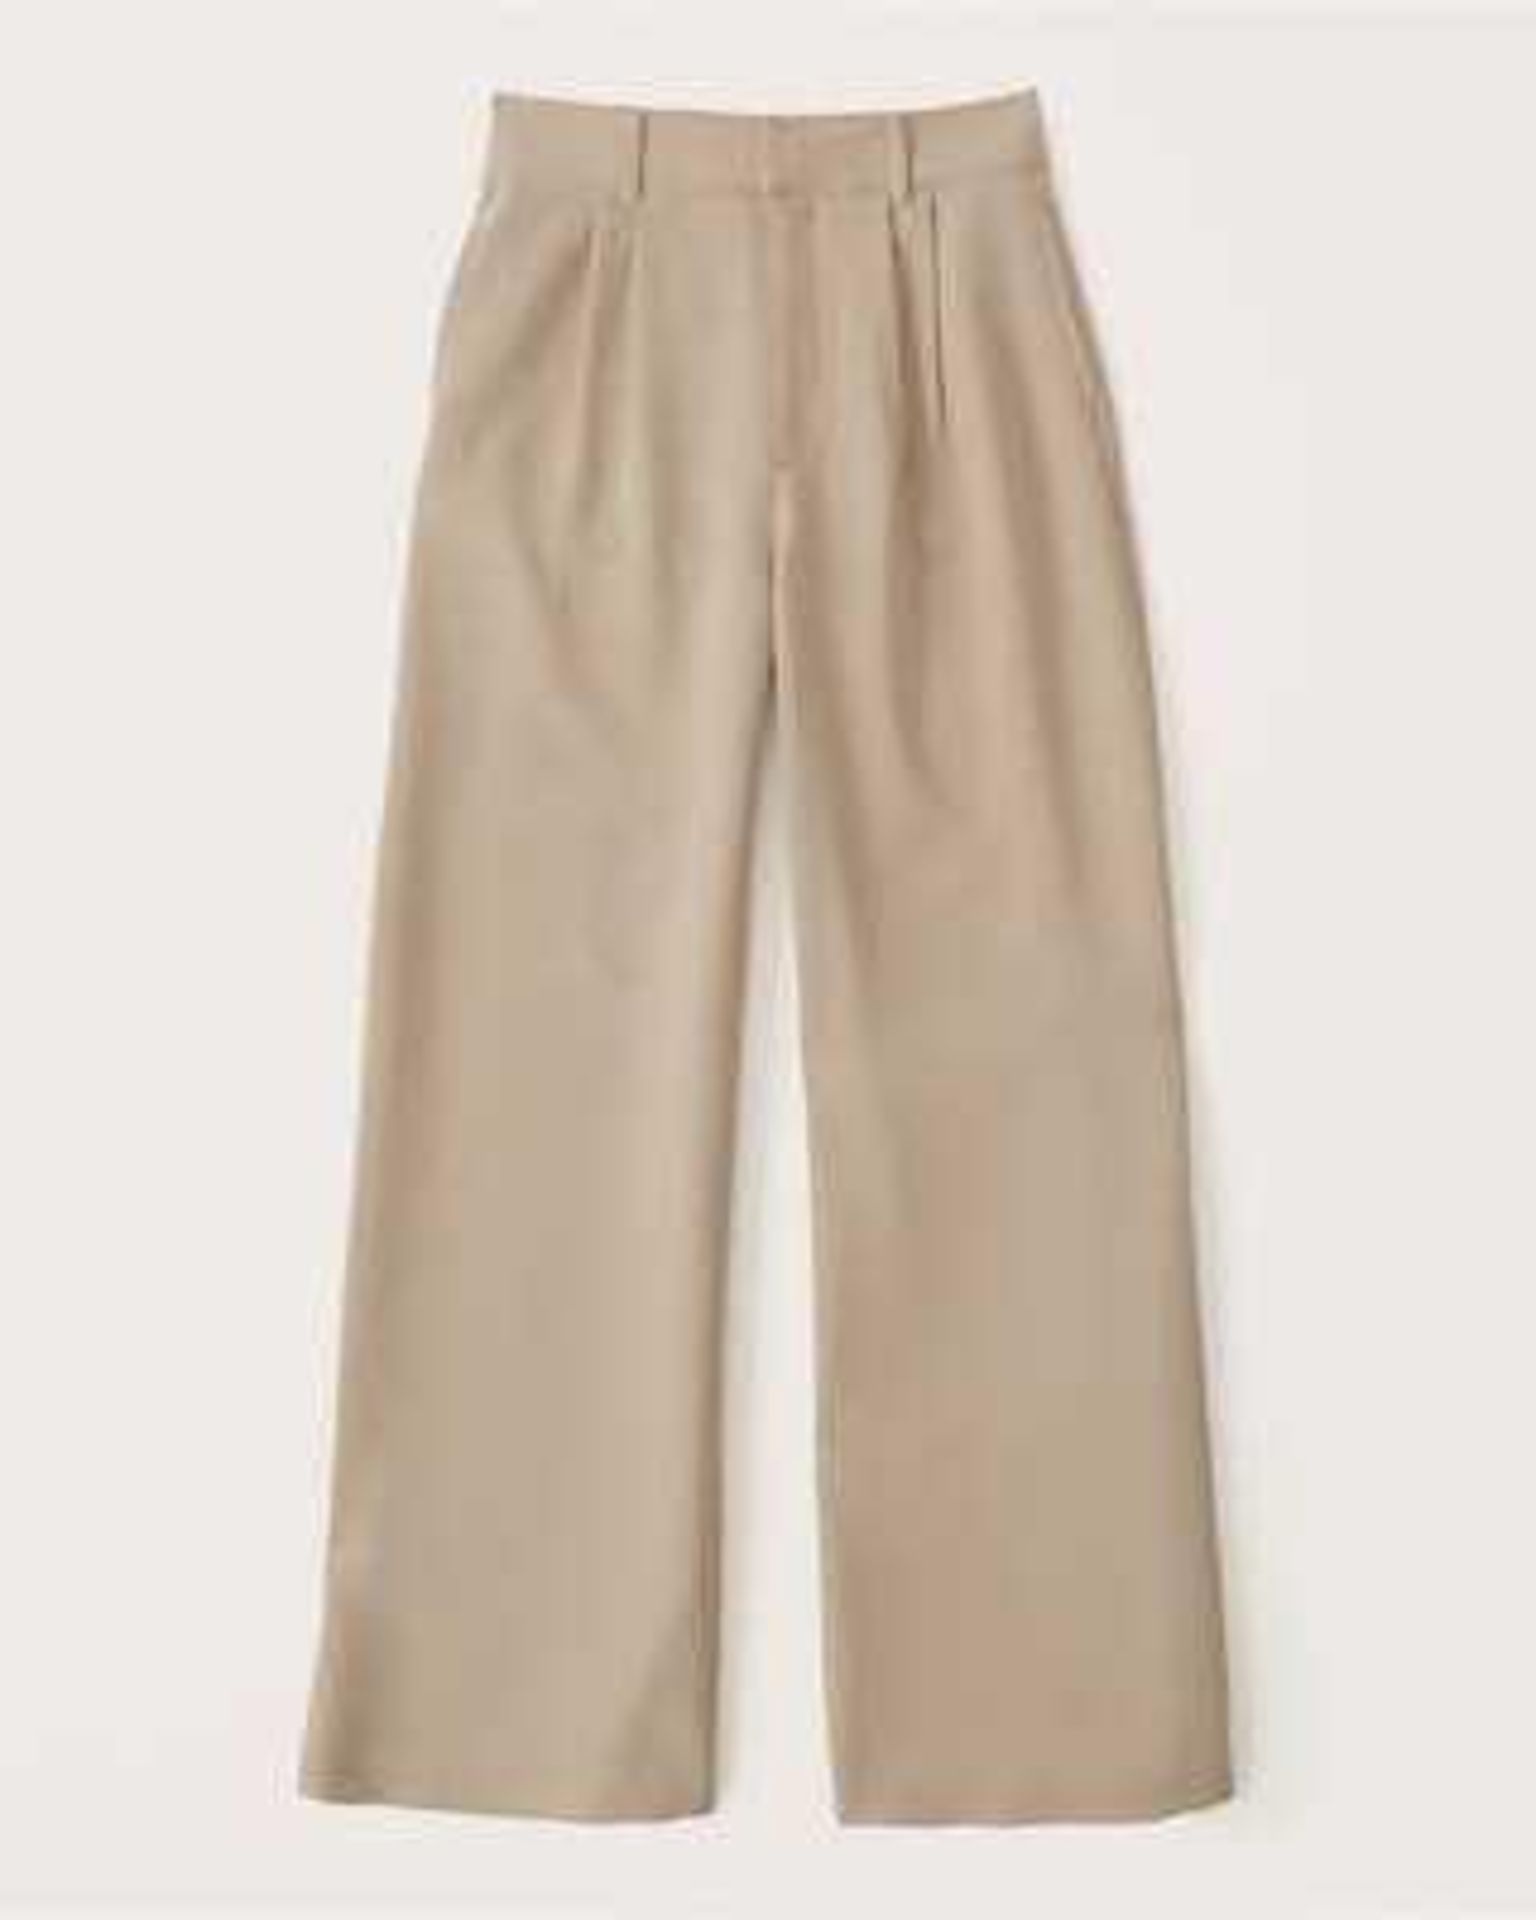 (Dd) RRP £300 Lot To Contain 1 (X1 John Lewis Size 20 Peg Trousers Blnv) (X2 John Lewis Size 18 Trou - Image 2 of 5